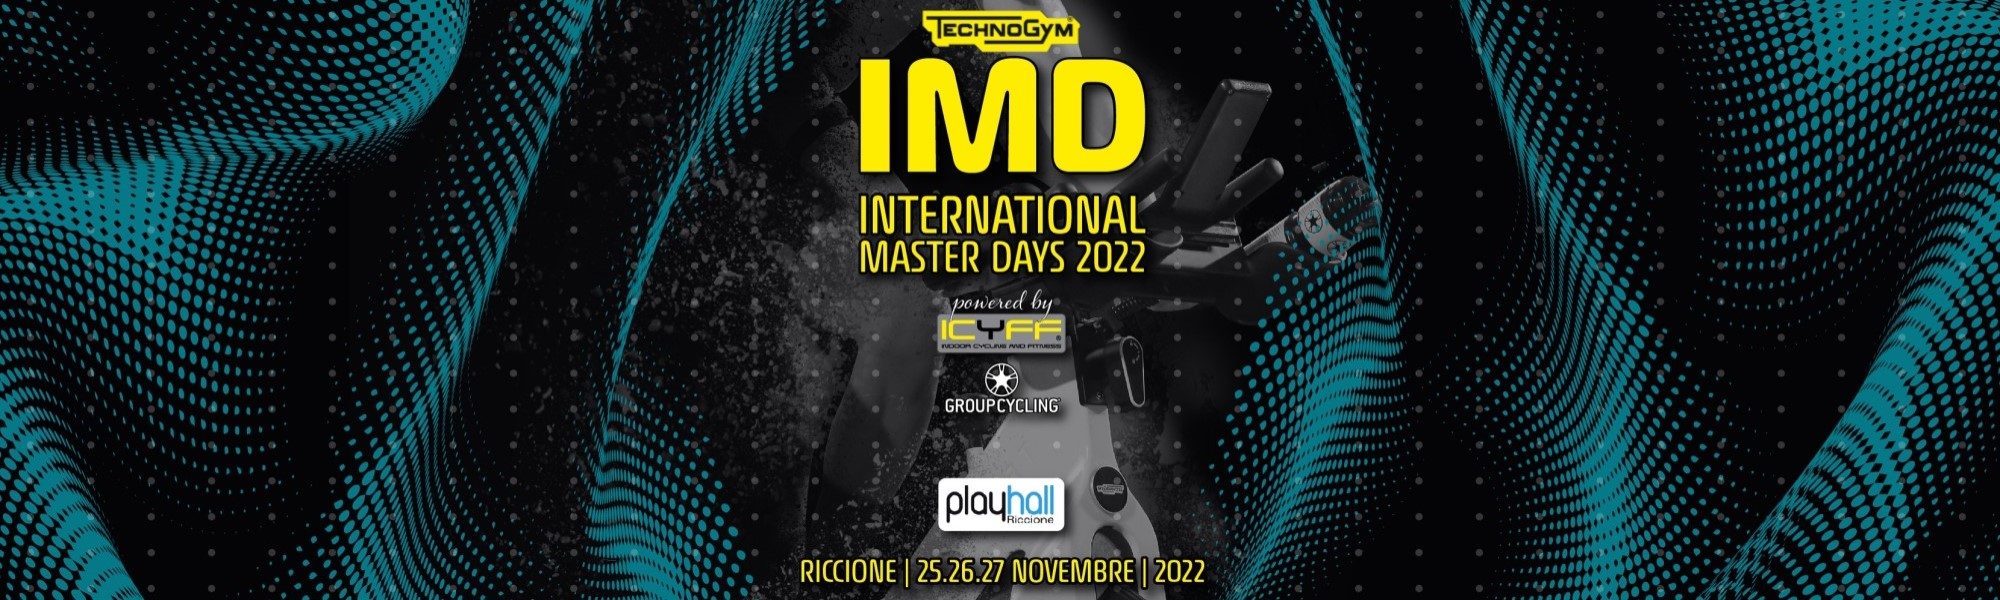 international master days